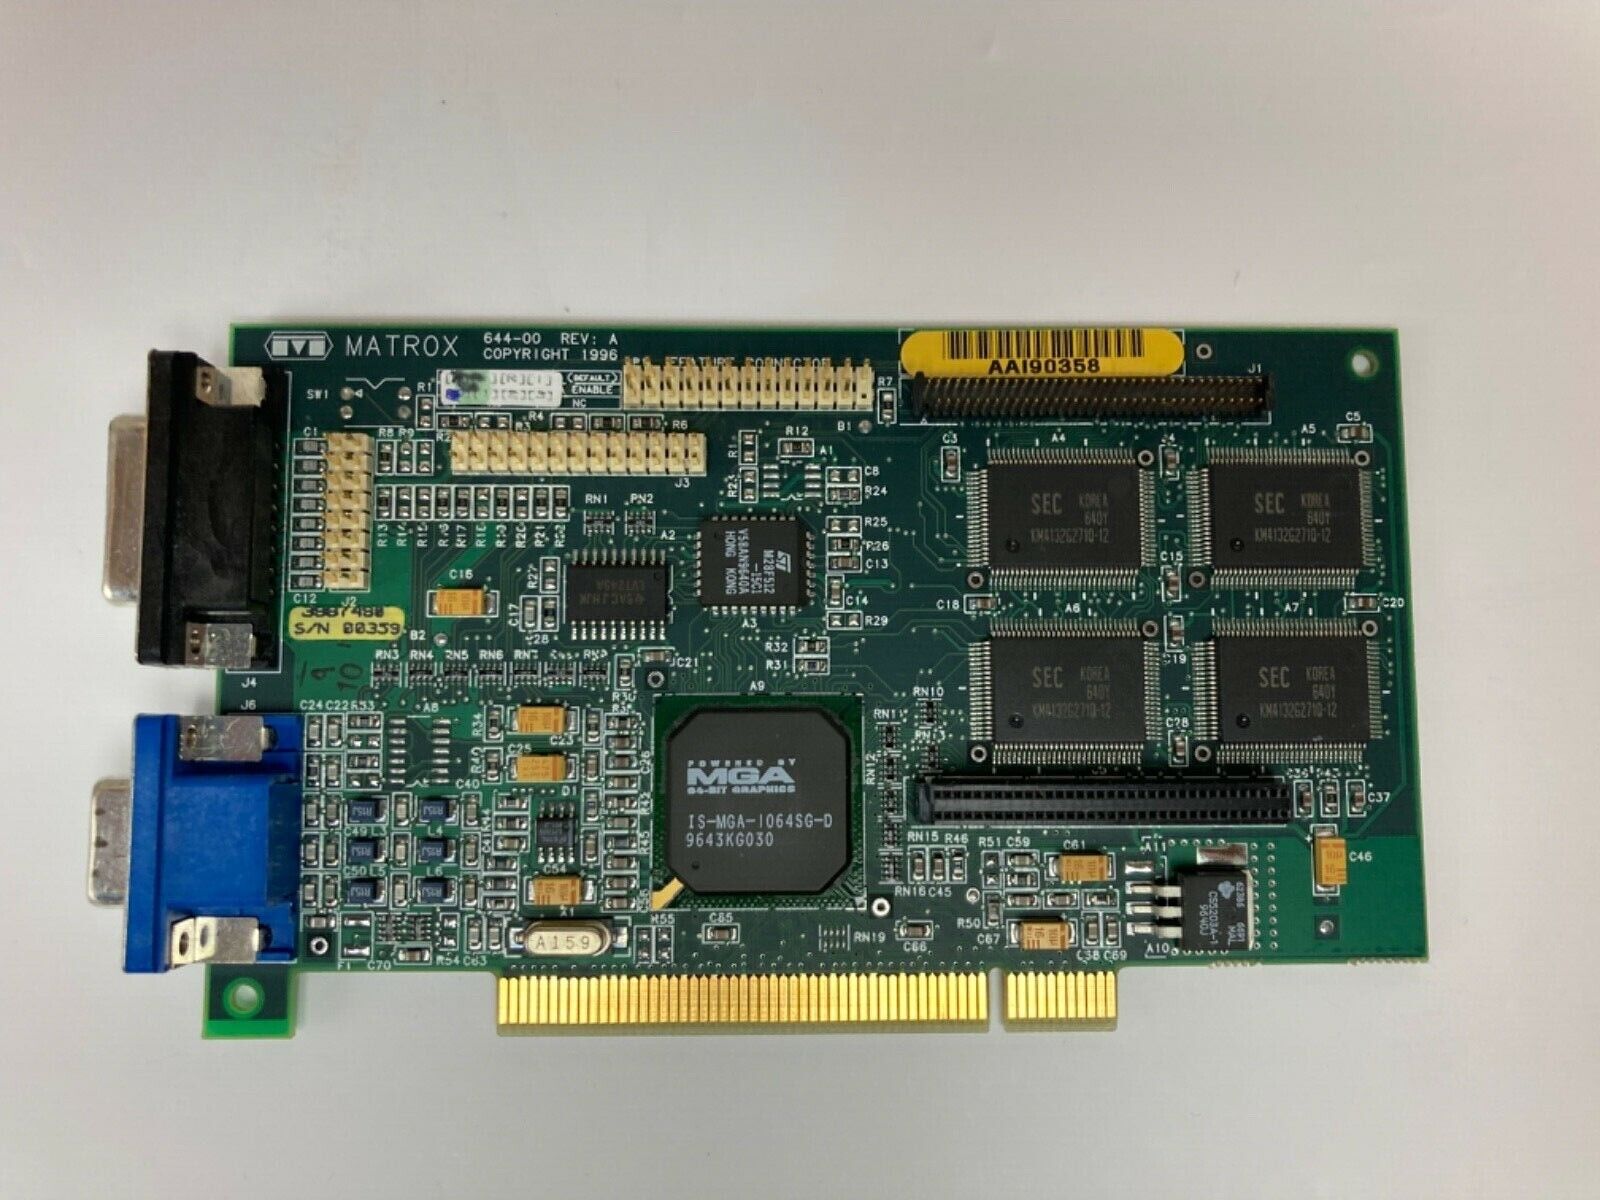 Vtg Matrox MGA 644-00 Rev A MYST/4BN 4MB Retro PC Graphics Card Tested